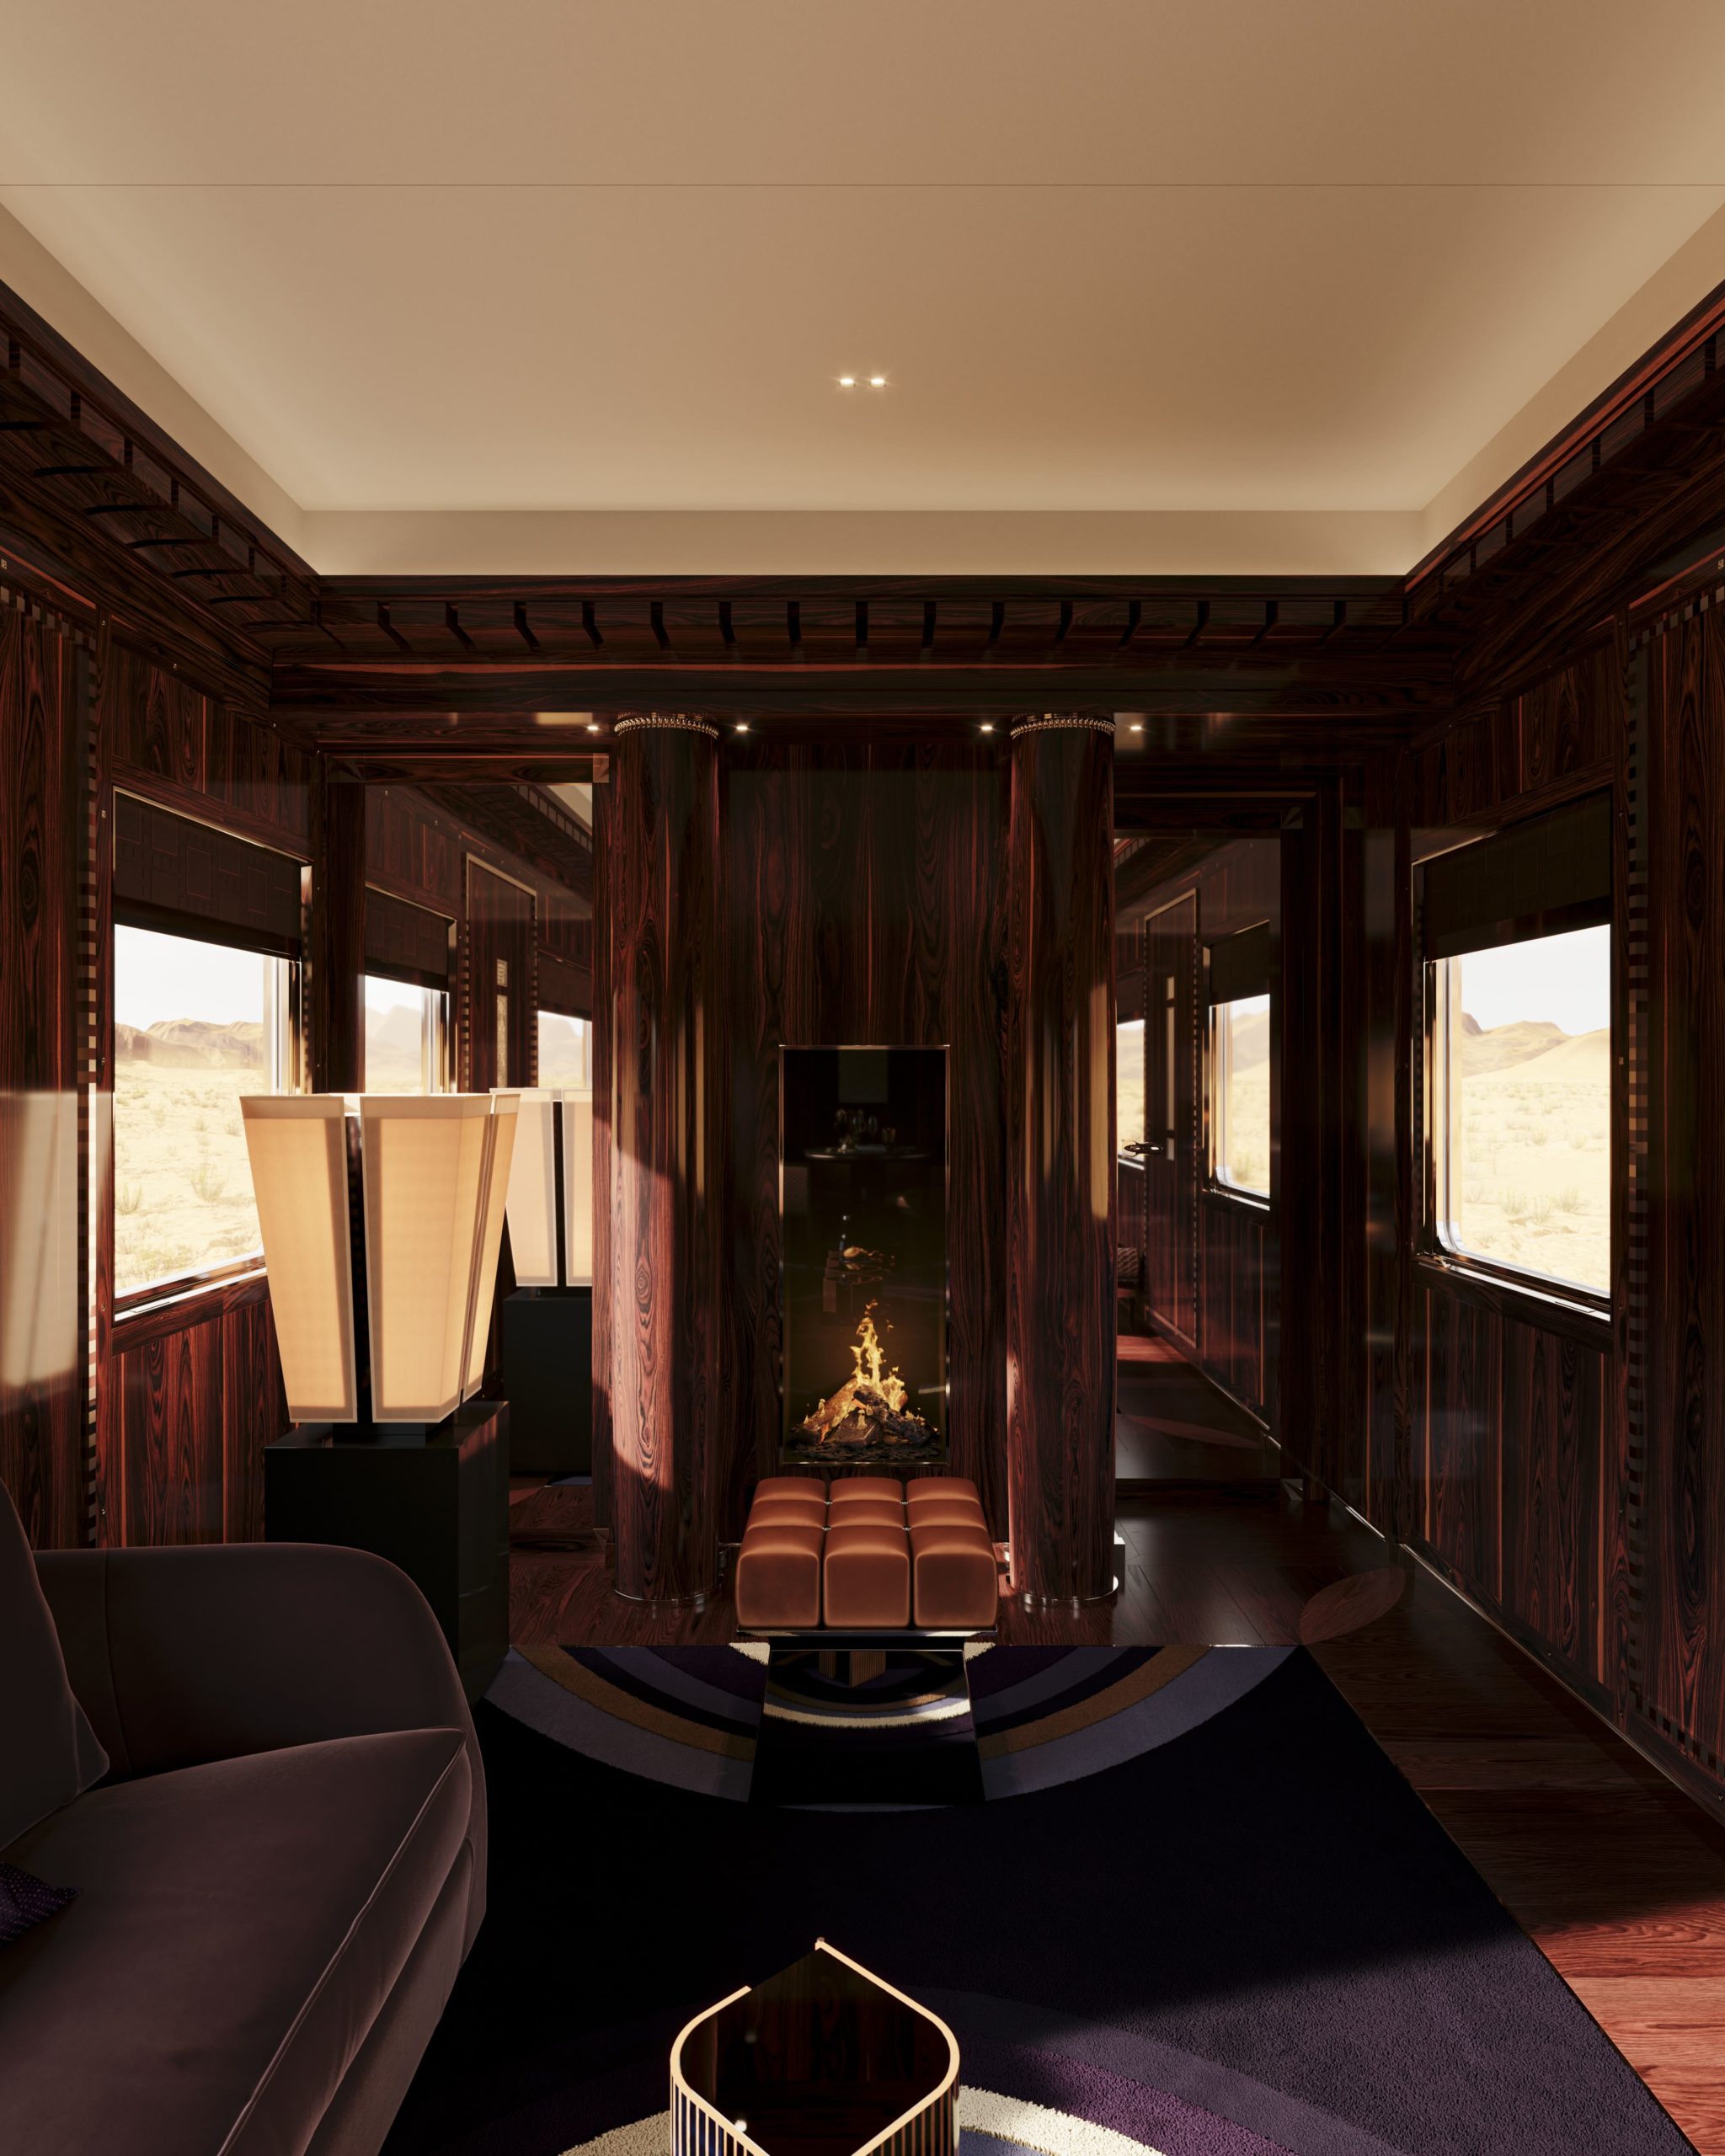 Orient Express Revelation Travels to Design Miami - Orient Express